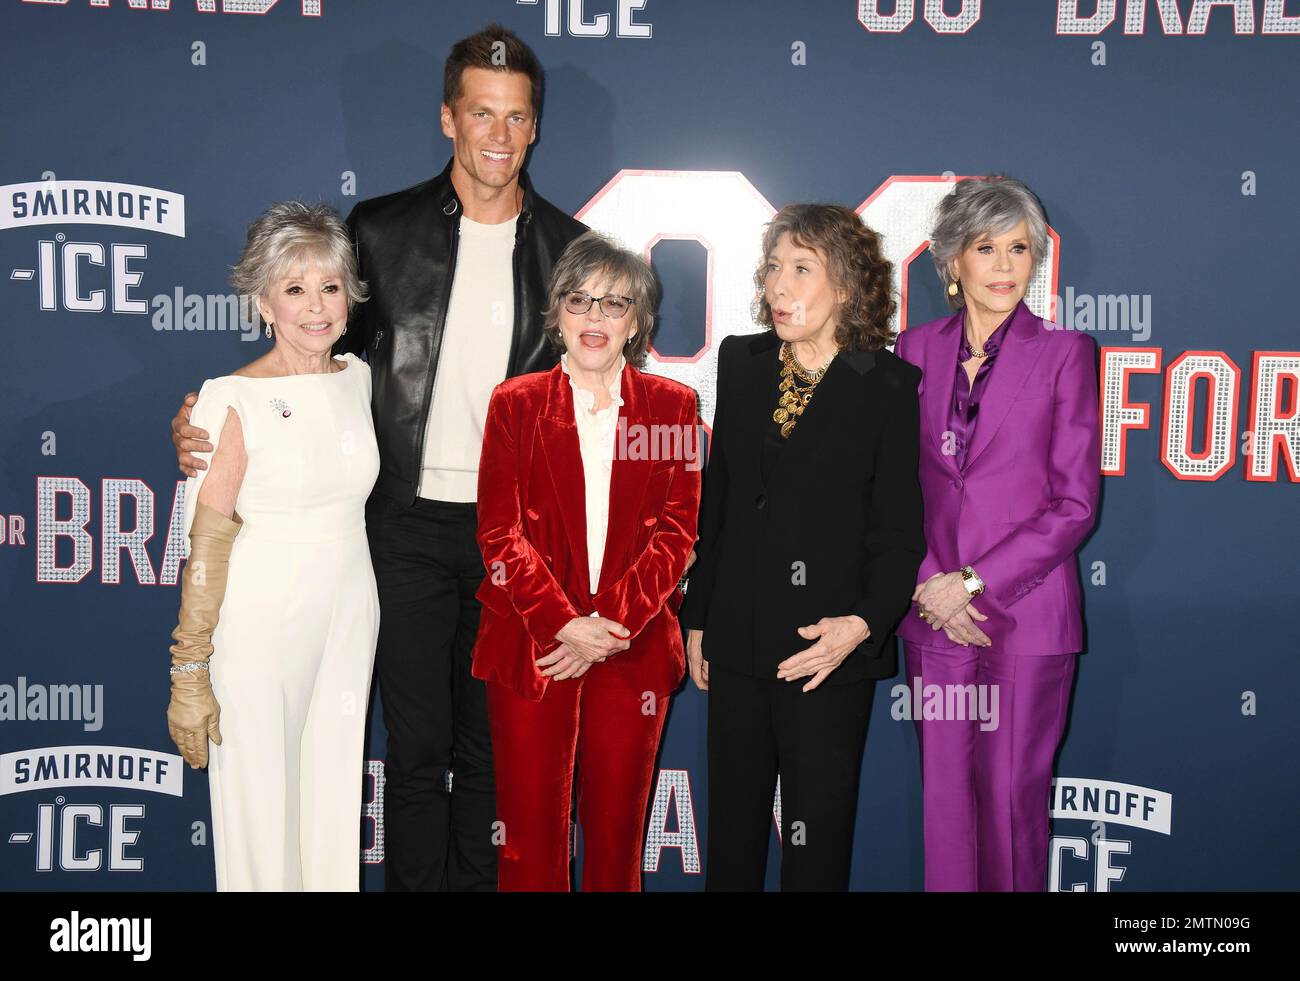 LOS ANGELES, CA - 31. JANUAR: (L-R) Rita Moreno, Tom Brady, Sally Field, Lily Tomlin und Jane Fonda nehmen an der Premiere von Param in Los Angeles Teil Stockfoto